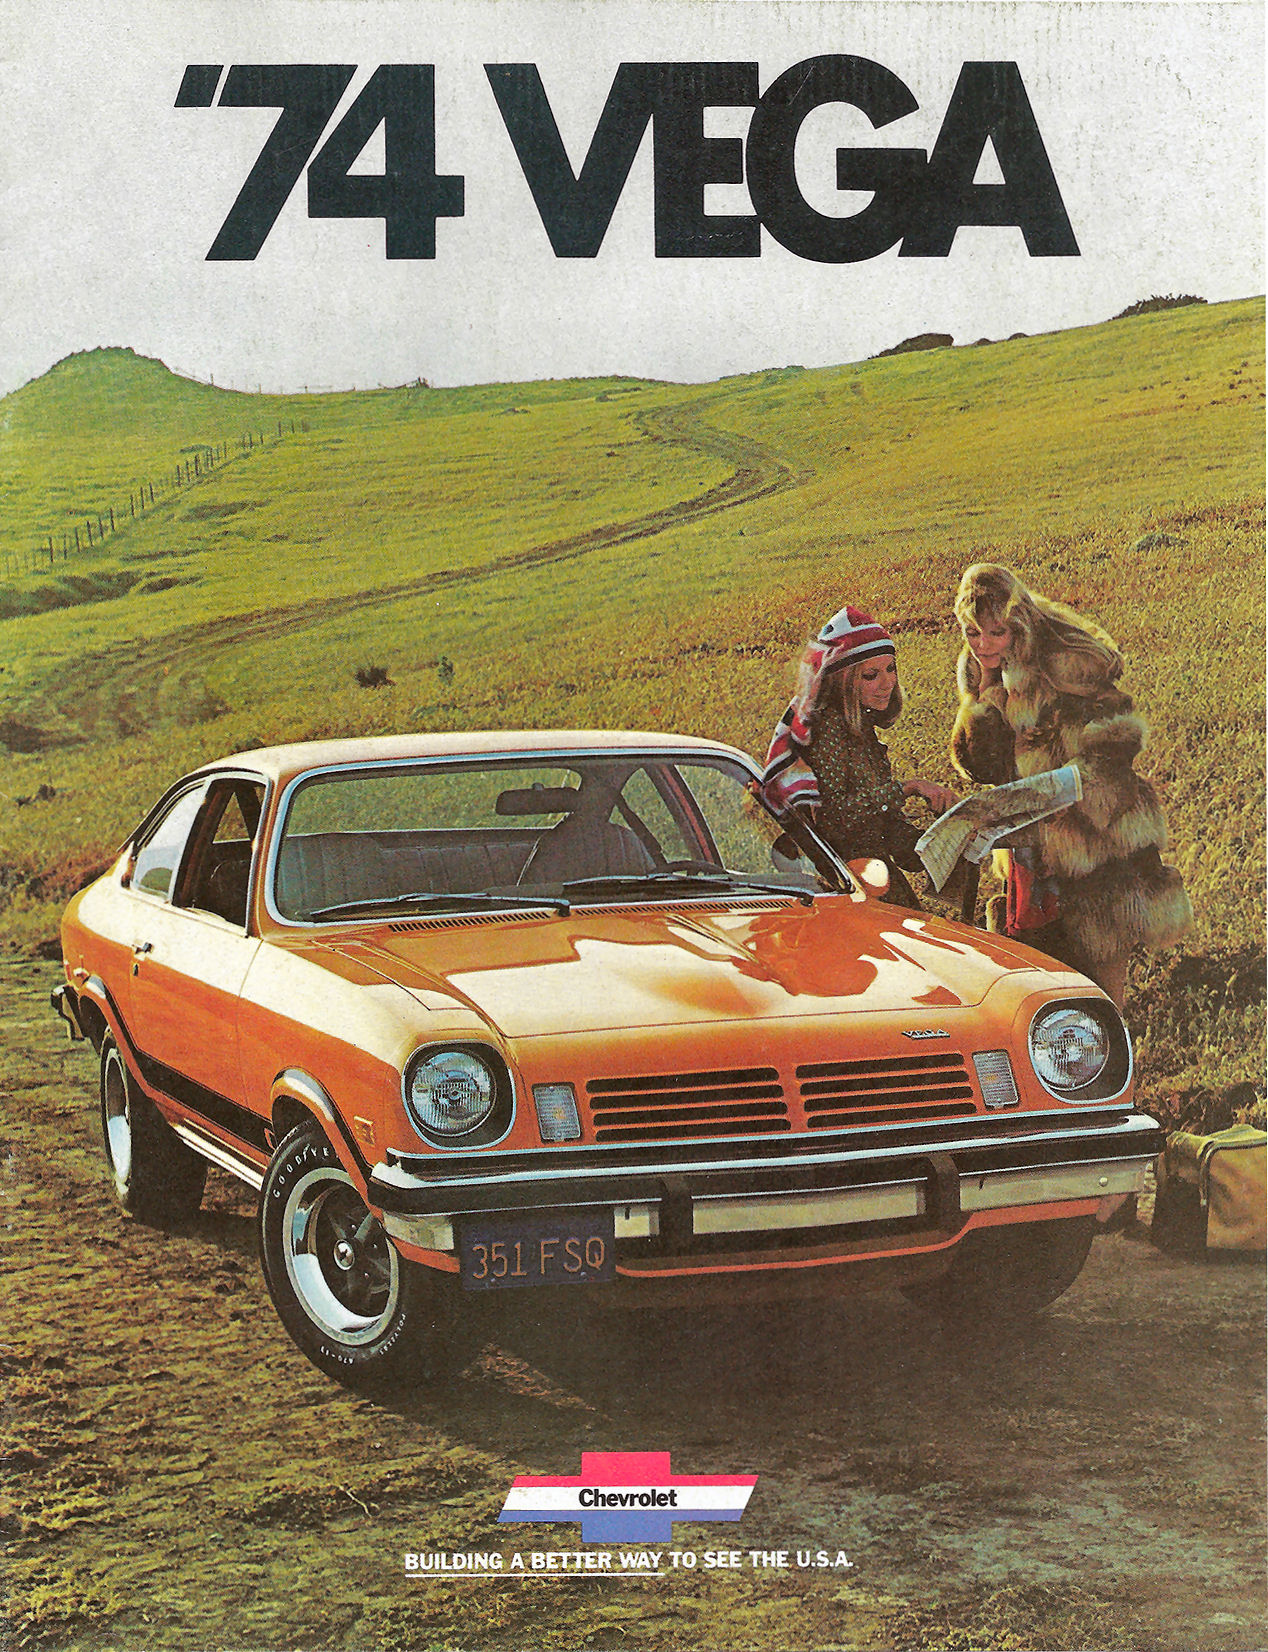 1974_Chevrolet_Vega-01